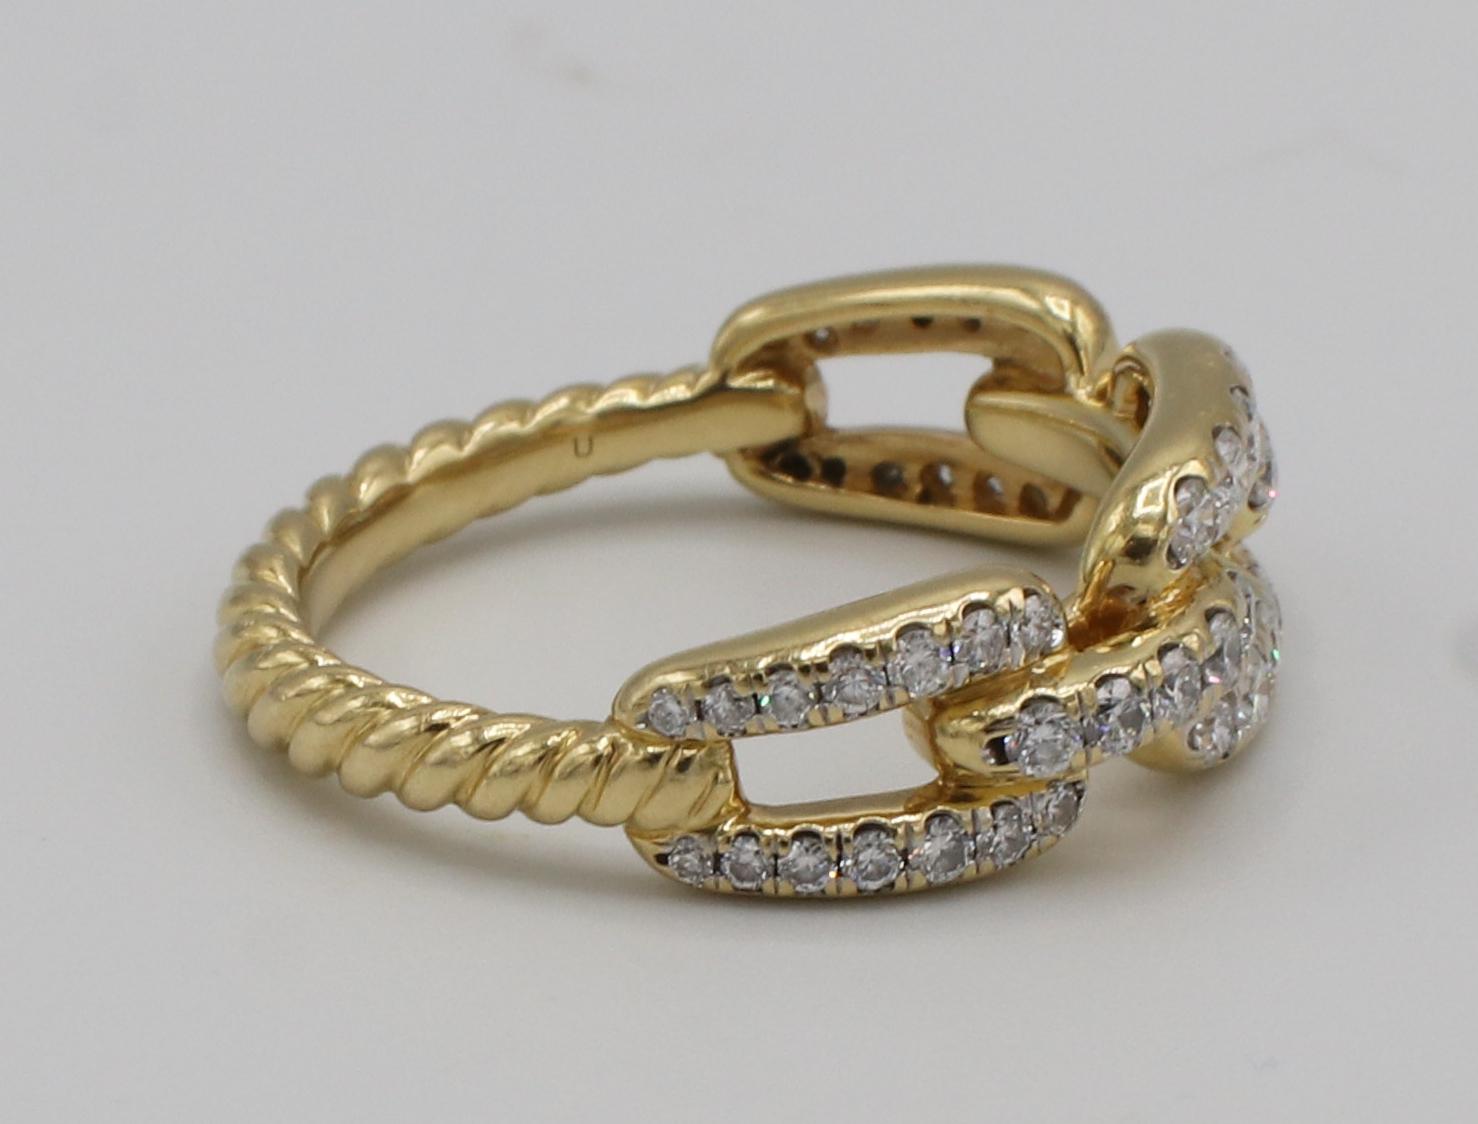 David Yurman Chain Link 18K Yellow Gold Pavé Natural Diamond Ring 
Metal: 18 karat yellow gold
Diamonds: Natural round diamonds, 0.51 total carat weight
Width: 7mm
Size: 6 (US)
Weight: 4.65 grams
Retail: $2500 USD
Signed: ©D.Y. 750
